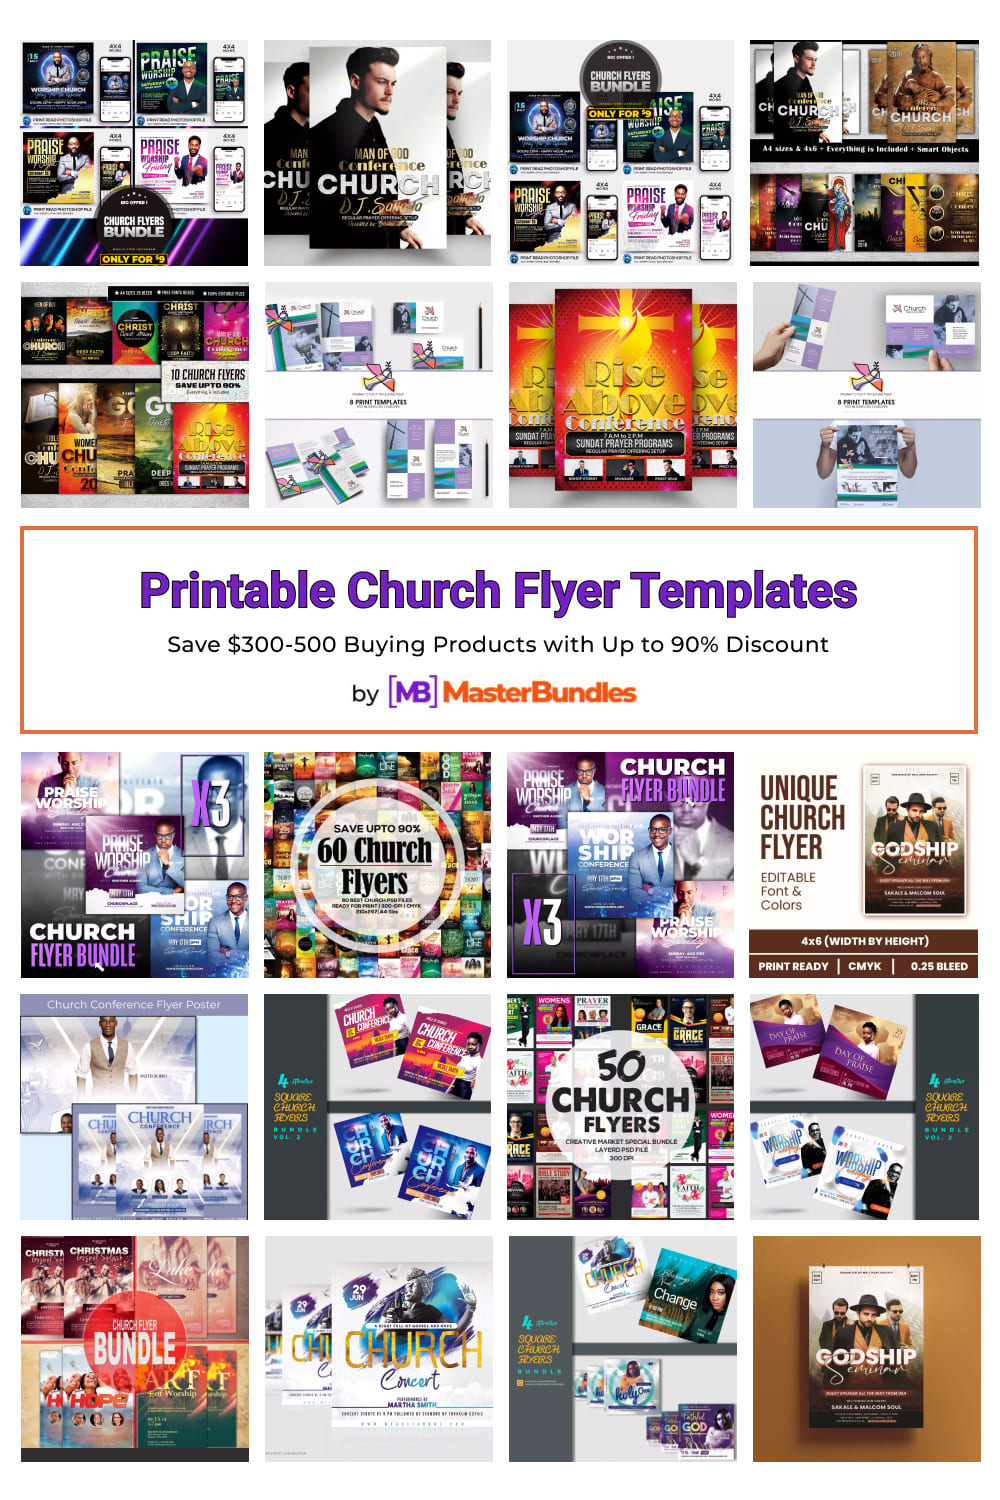 Printable Church Flyer Templates Pinterest image.